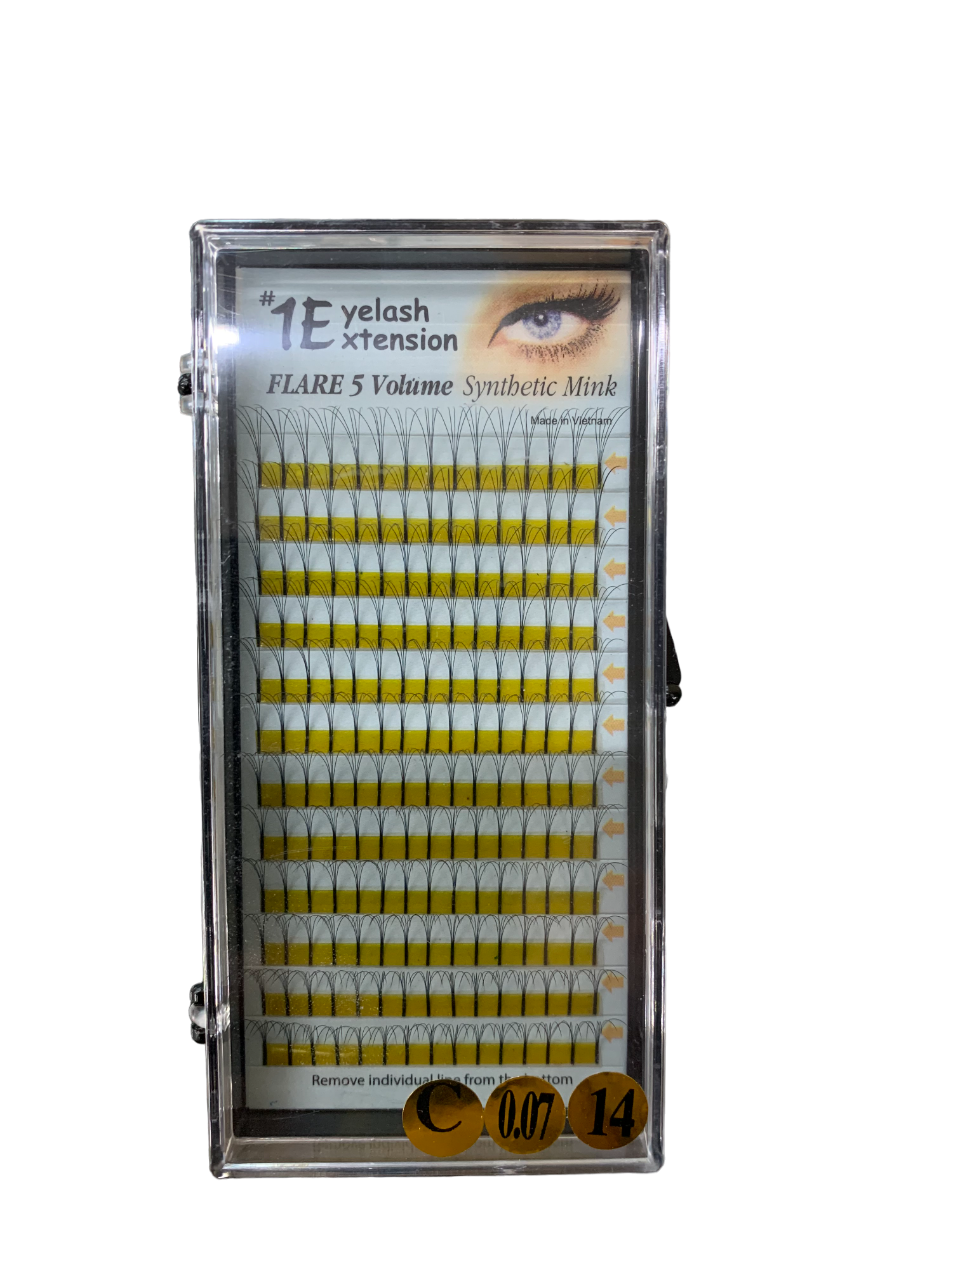 1E Eyelash Extension Flare 5 Volume Synthetic Mink C-0.07-14